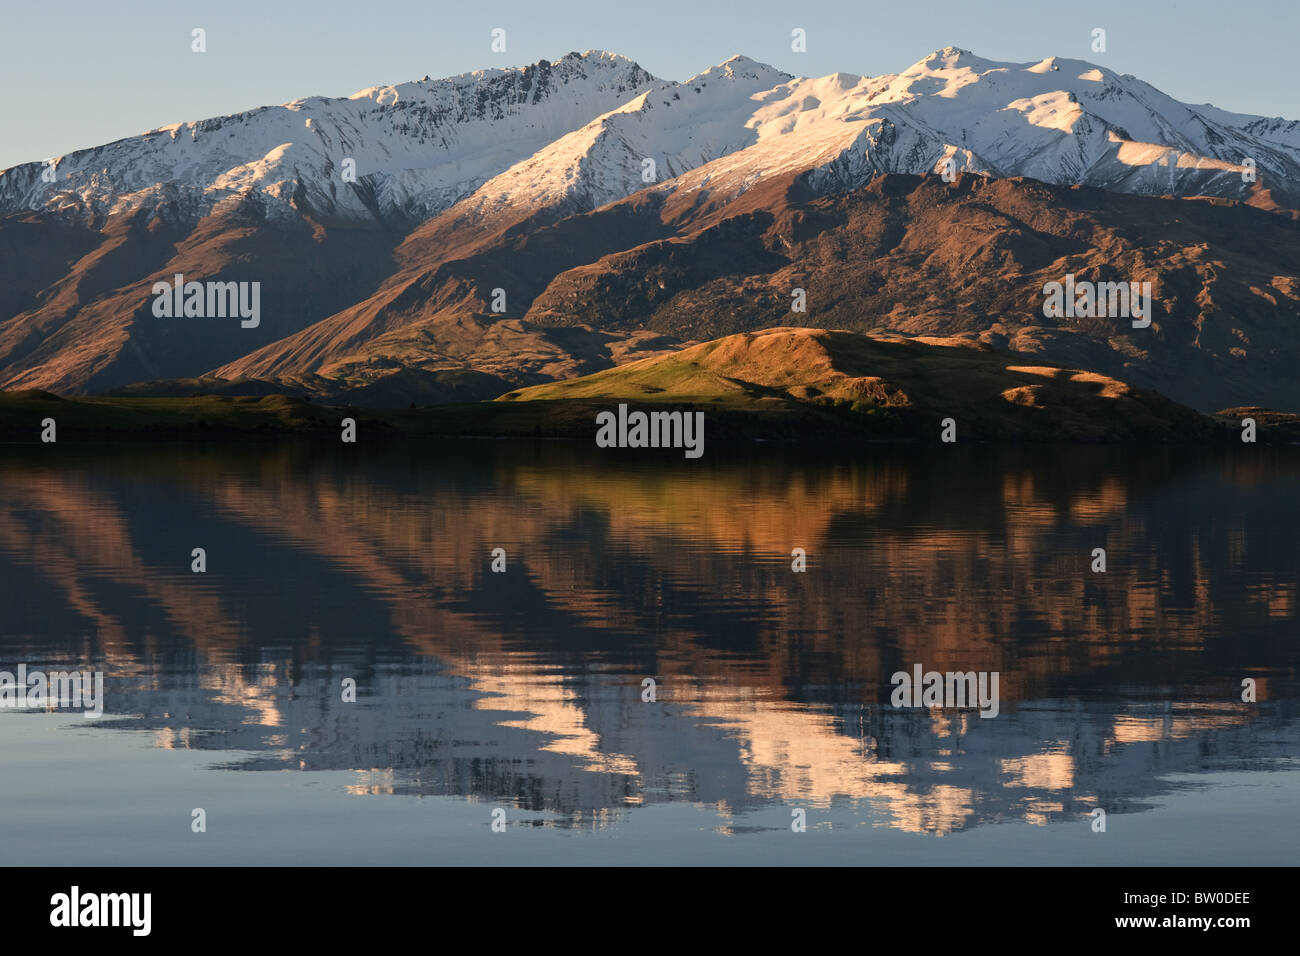 Mountain reflection in Lake, new zealand Stock Photo